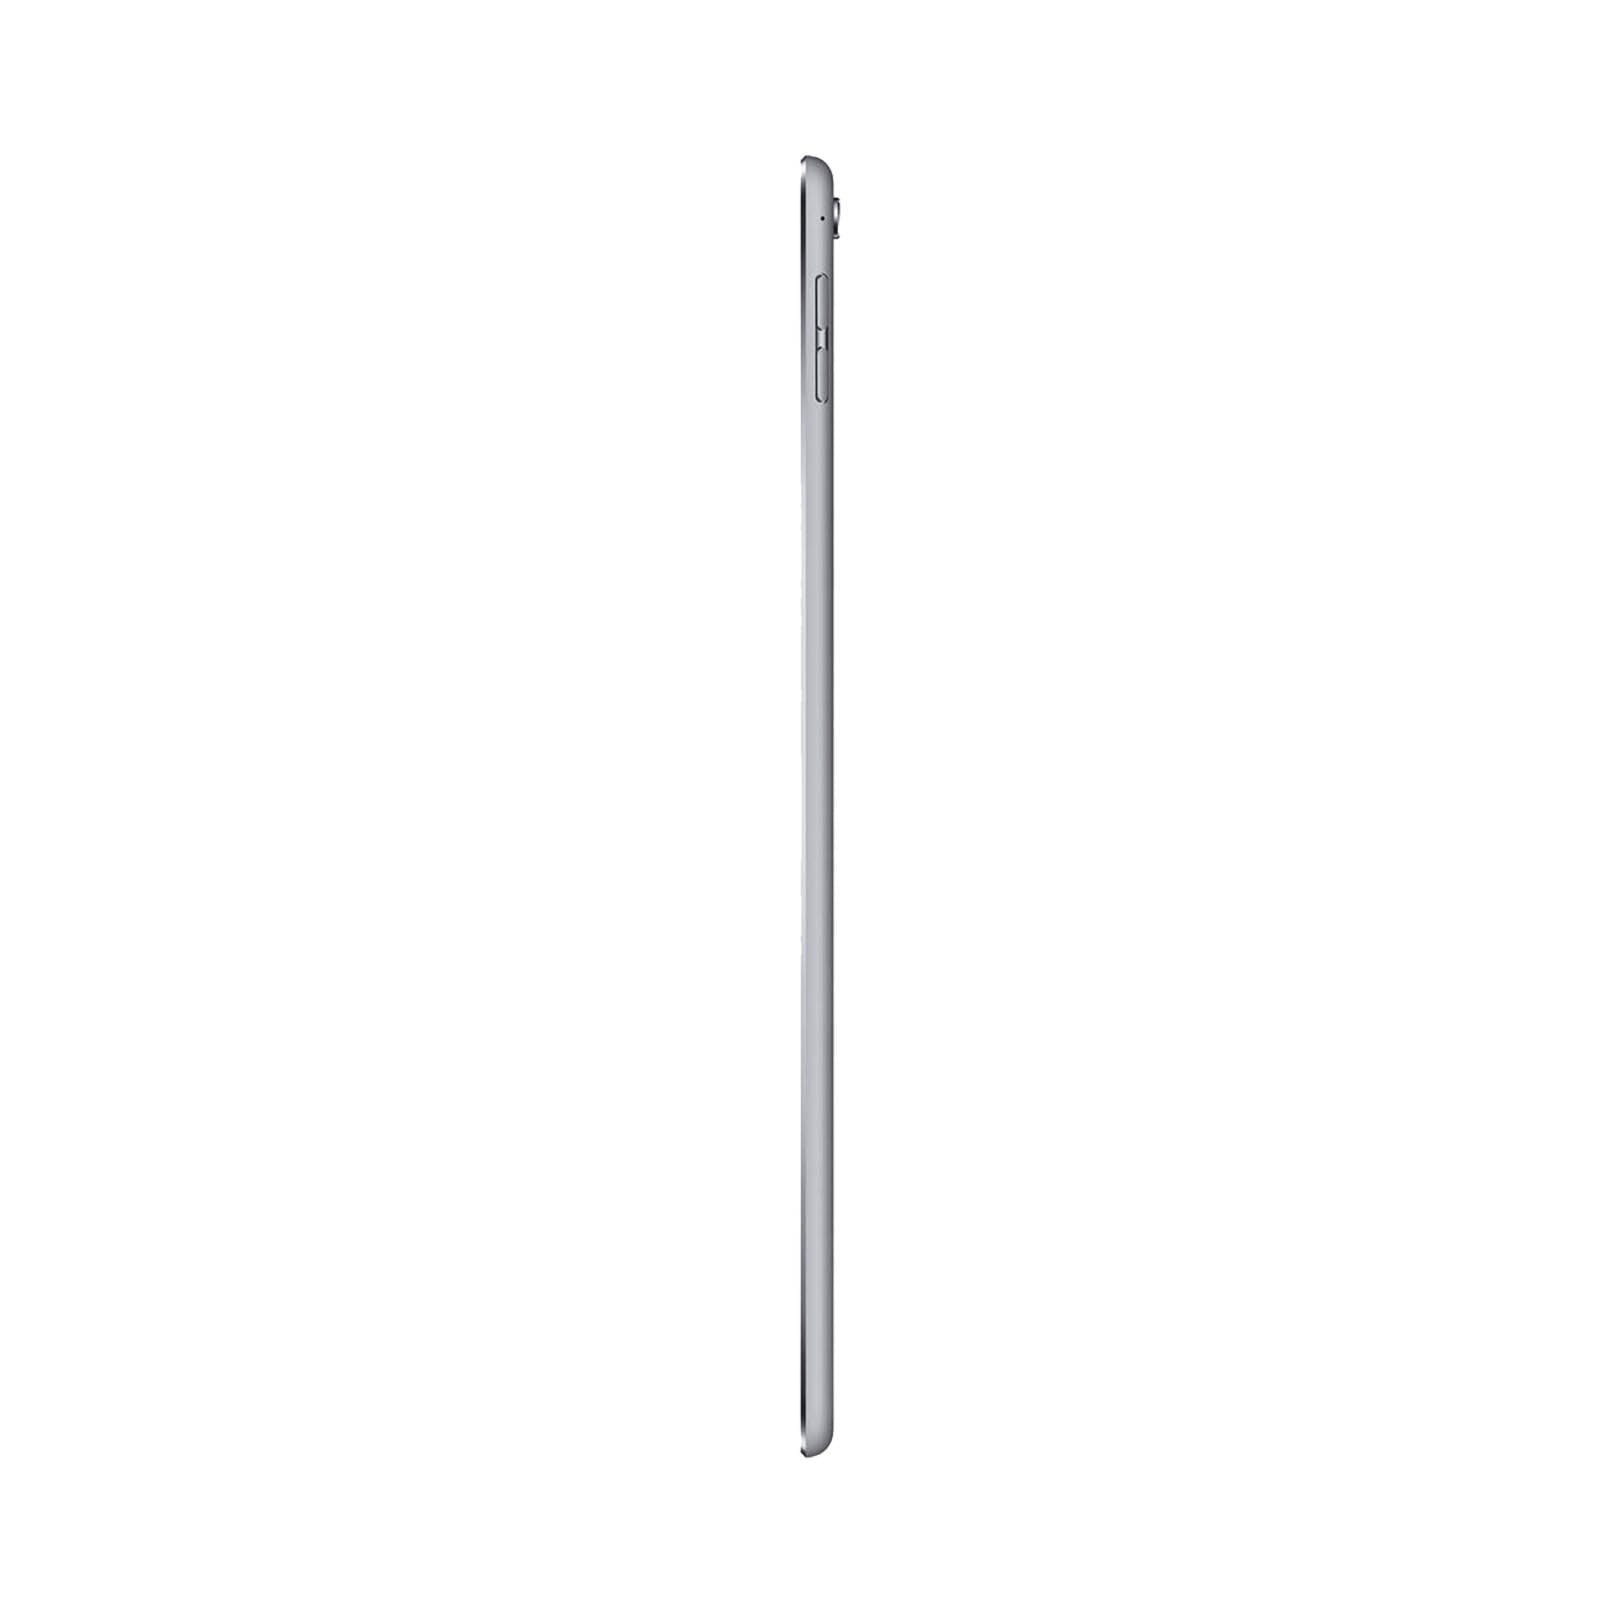 Apple iPad Pro 9.7" 32GB Space Grey Pristine - WiFi